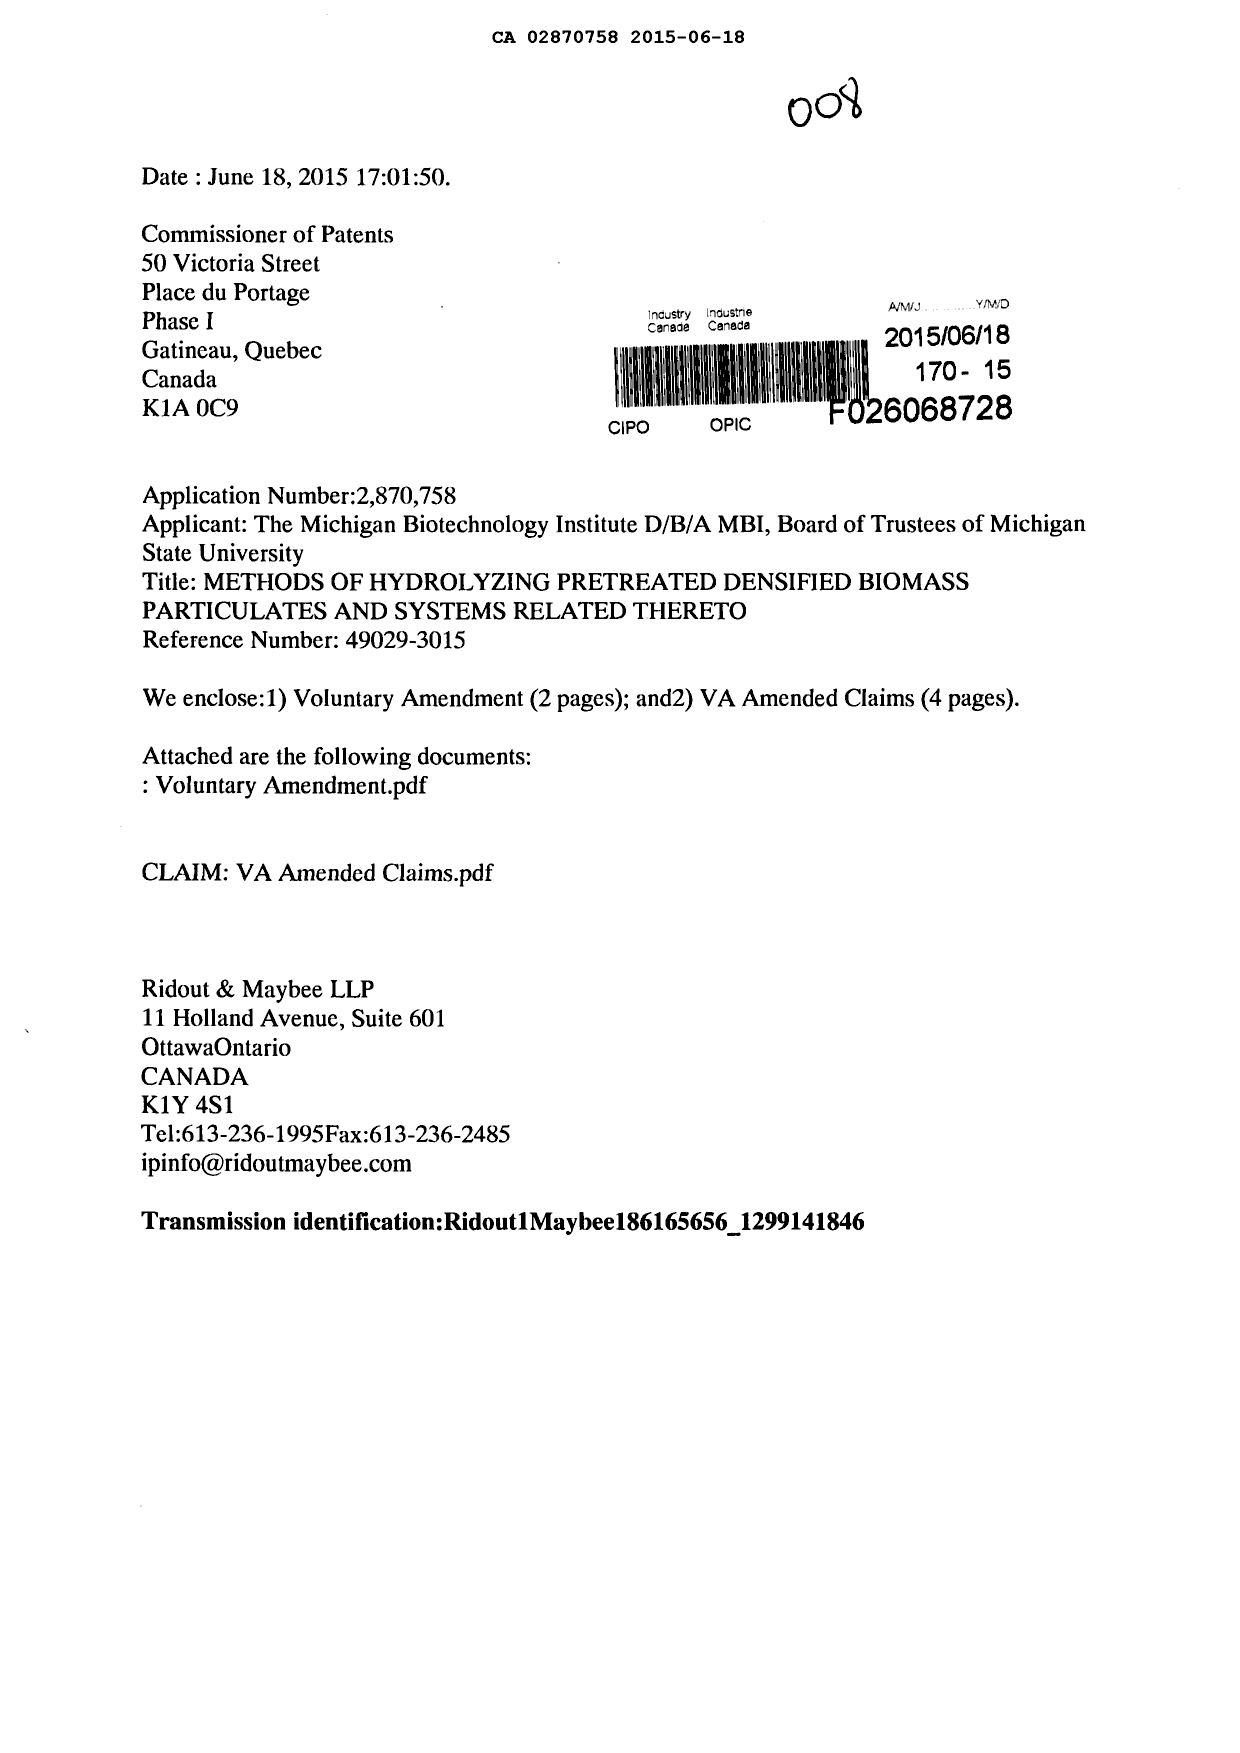 Canadian Patent Document 2870758. Amendment 20150618. Image 1 of 6